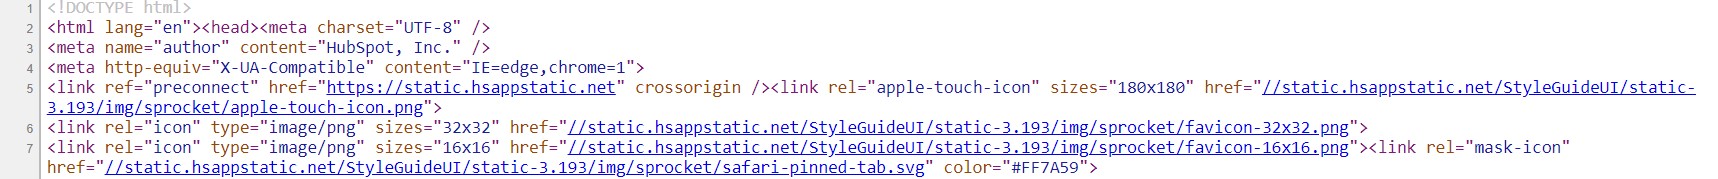 Meta tag H1 HTML example